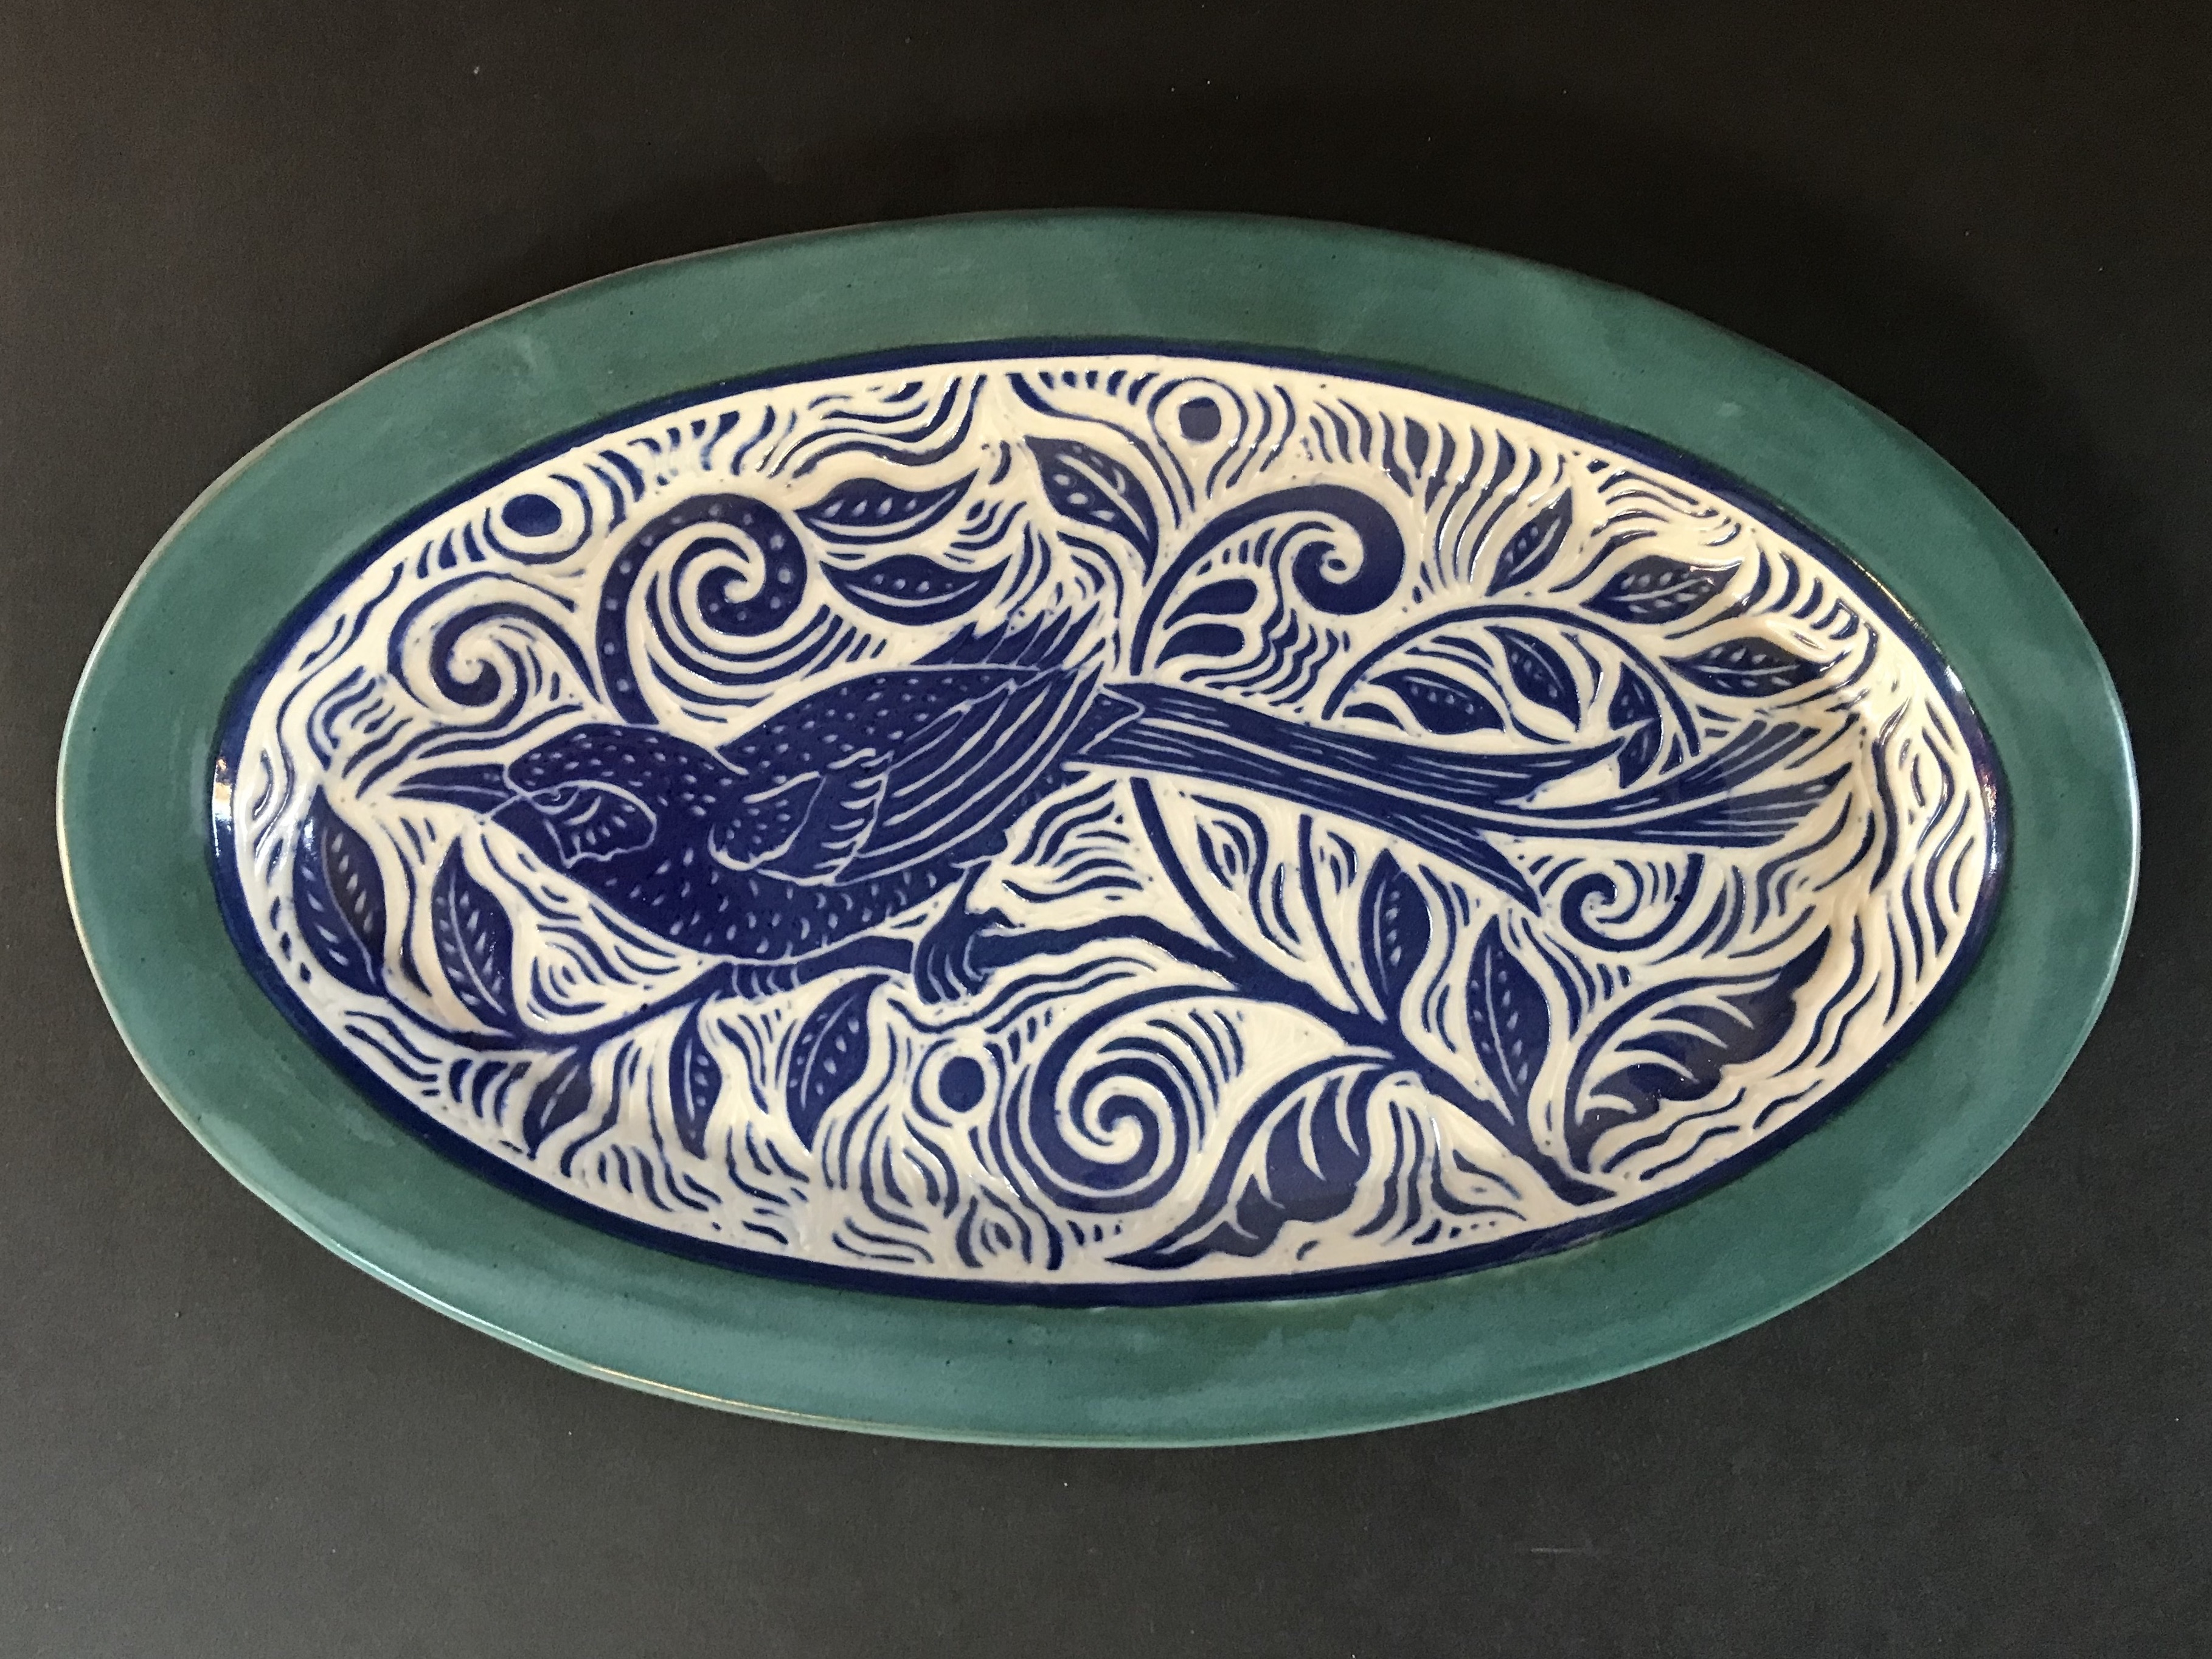 Ceramic Platter with stylized Magpie Design using Sgrafitto technique